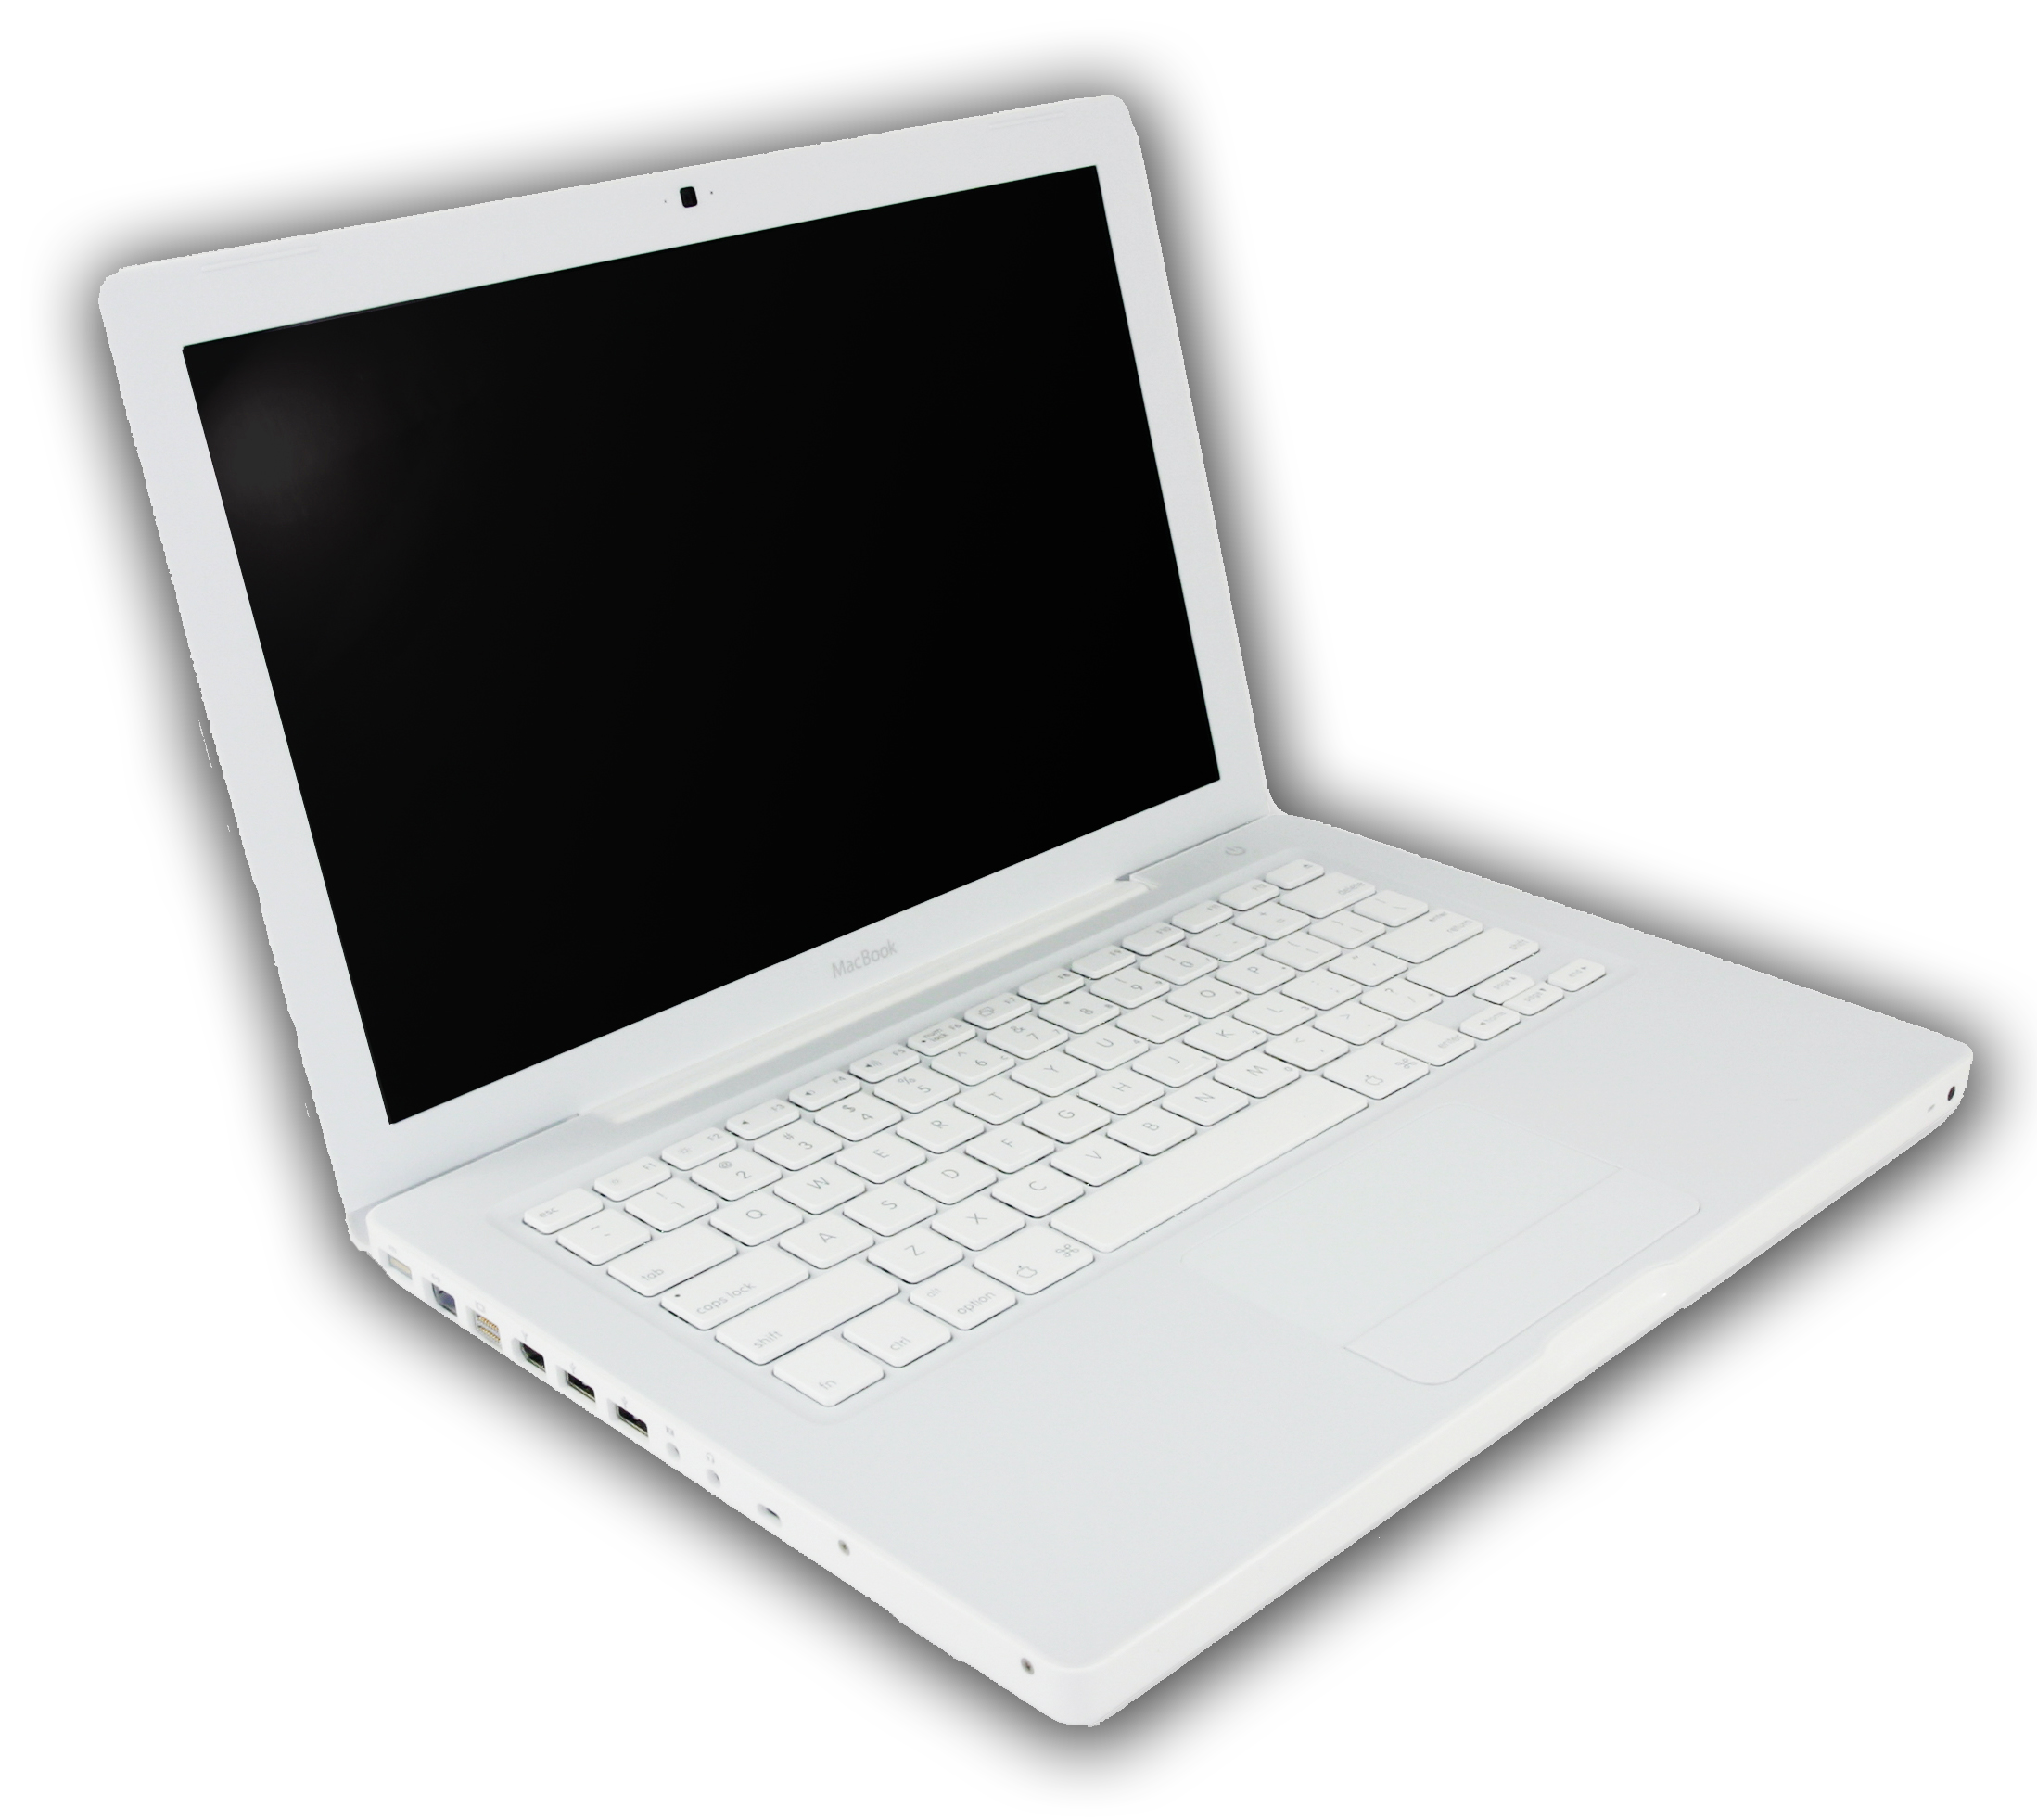 MacBook (original) | Apple Wiki | Fandom